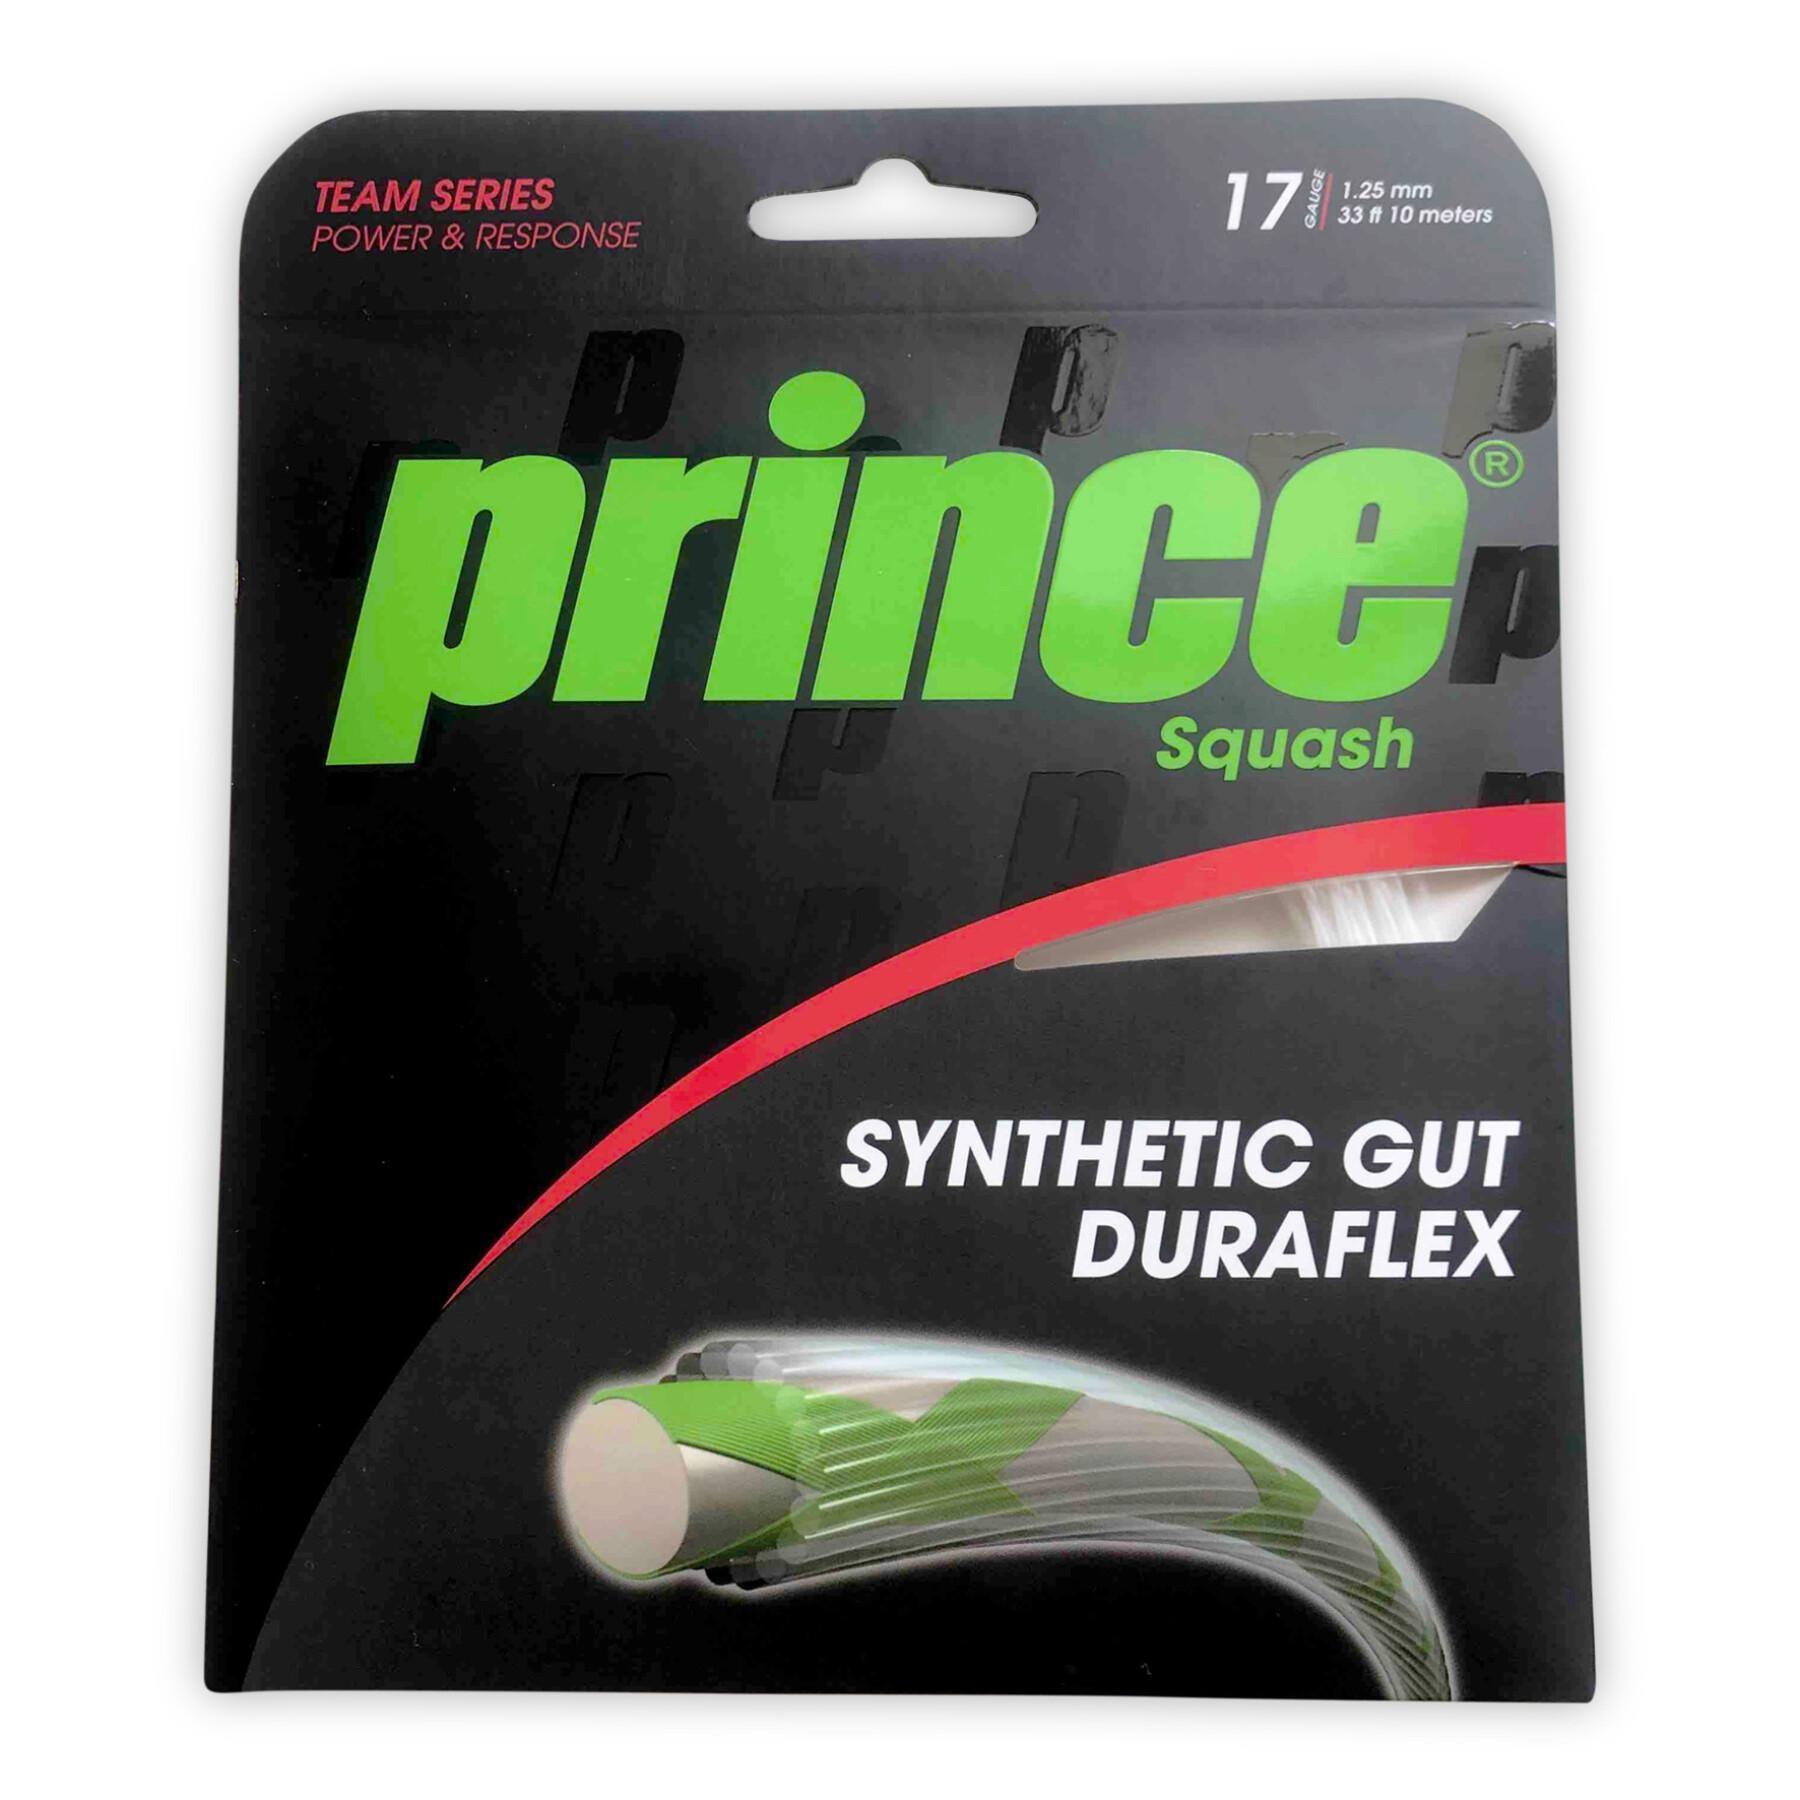 Hilos de calabaza Prince Synthetic Gut Duraflex